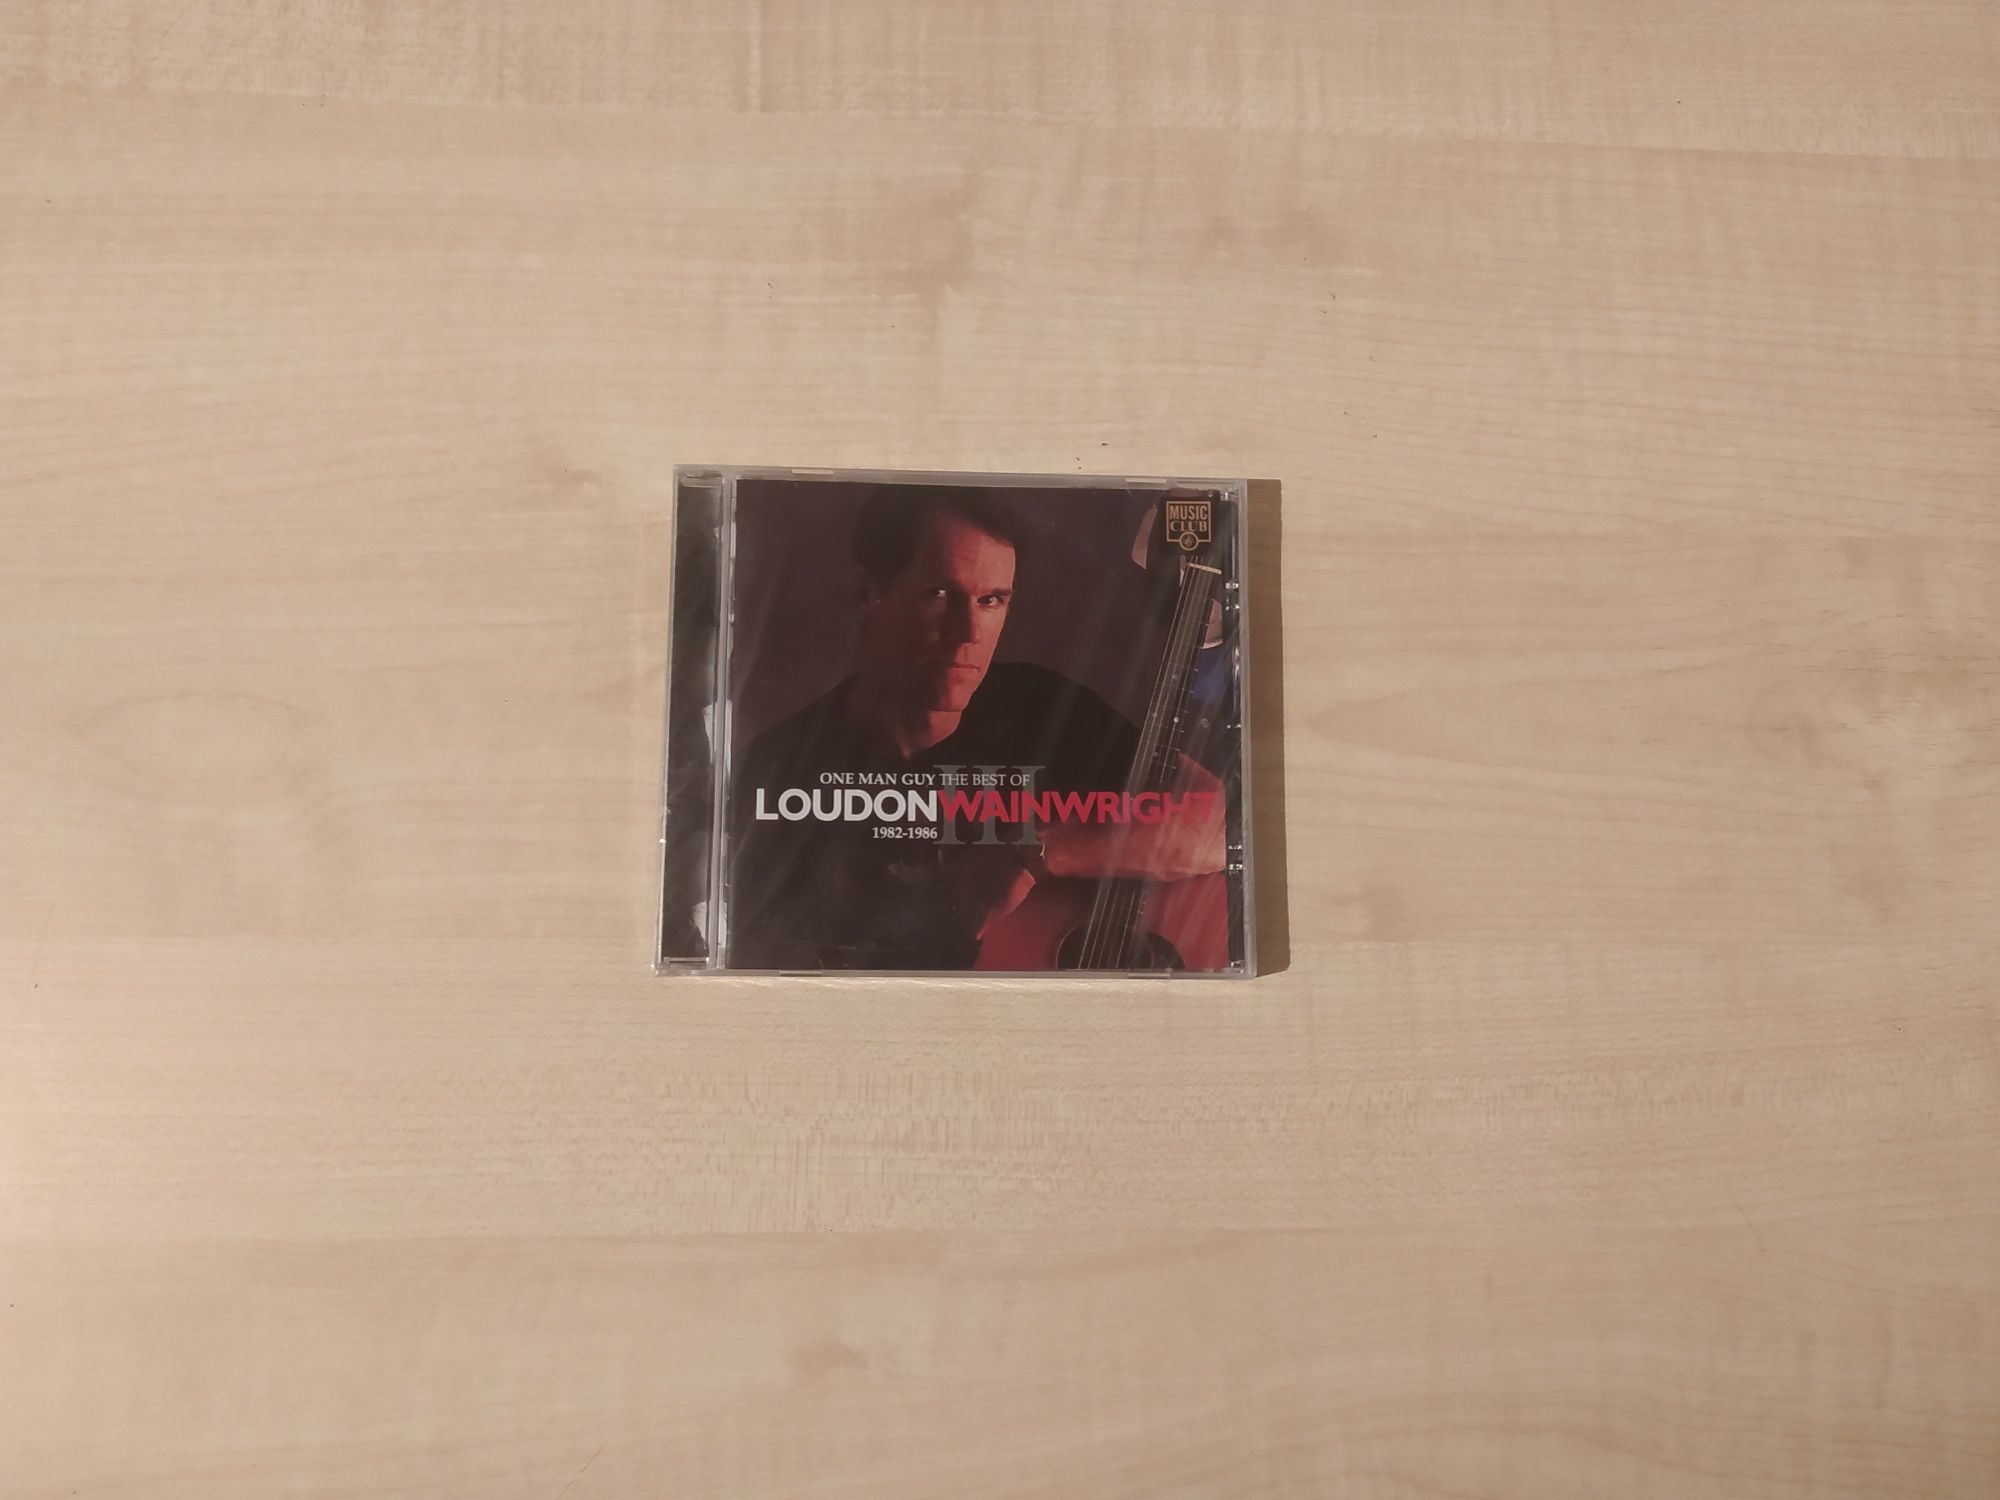 Loudon Wainwright III - One Man Guy. The Best of - cd